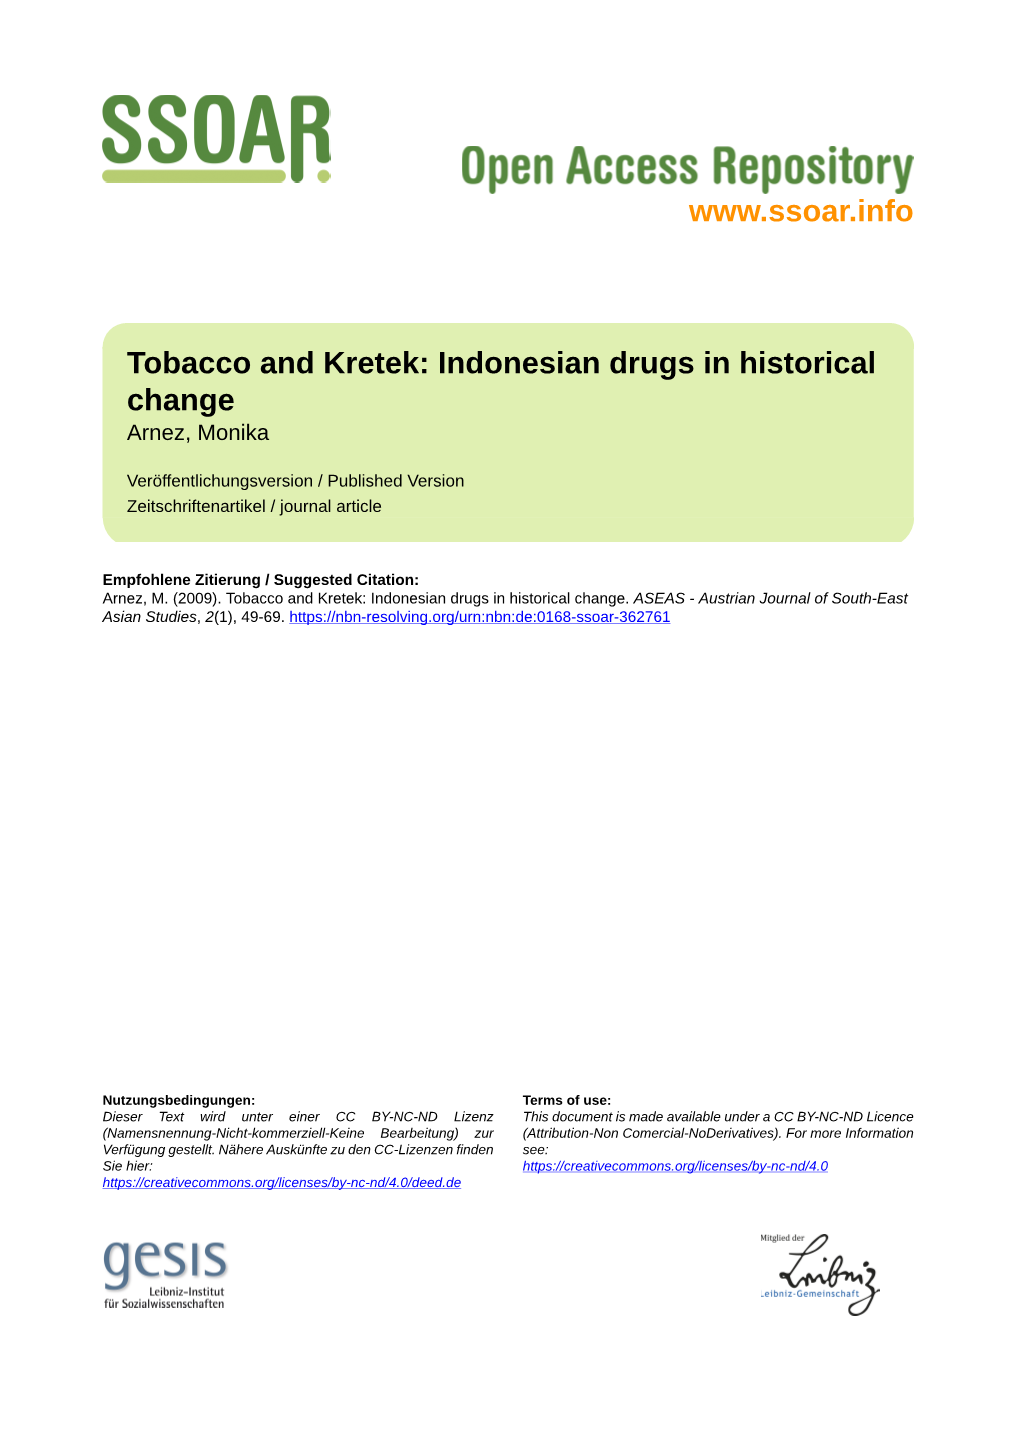 Tobacco and Kretek: Indonesian Drugs in Historical Change Arnez, Monika